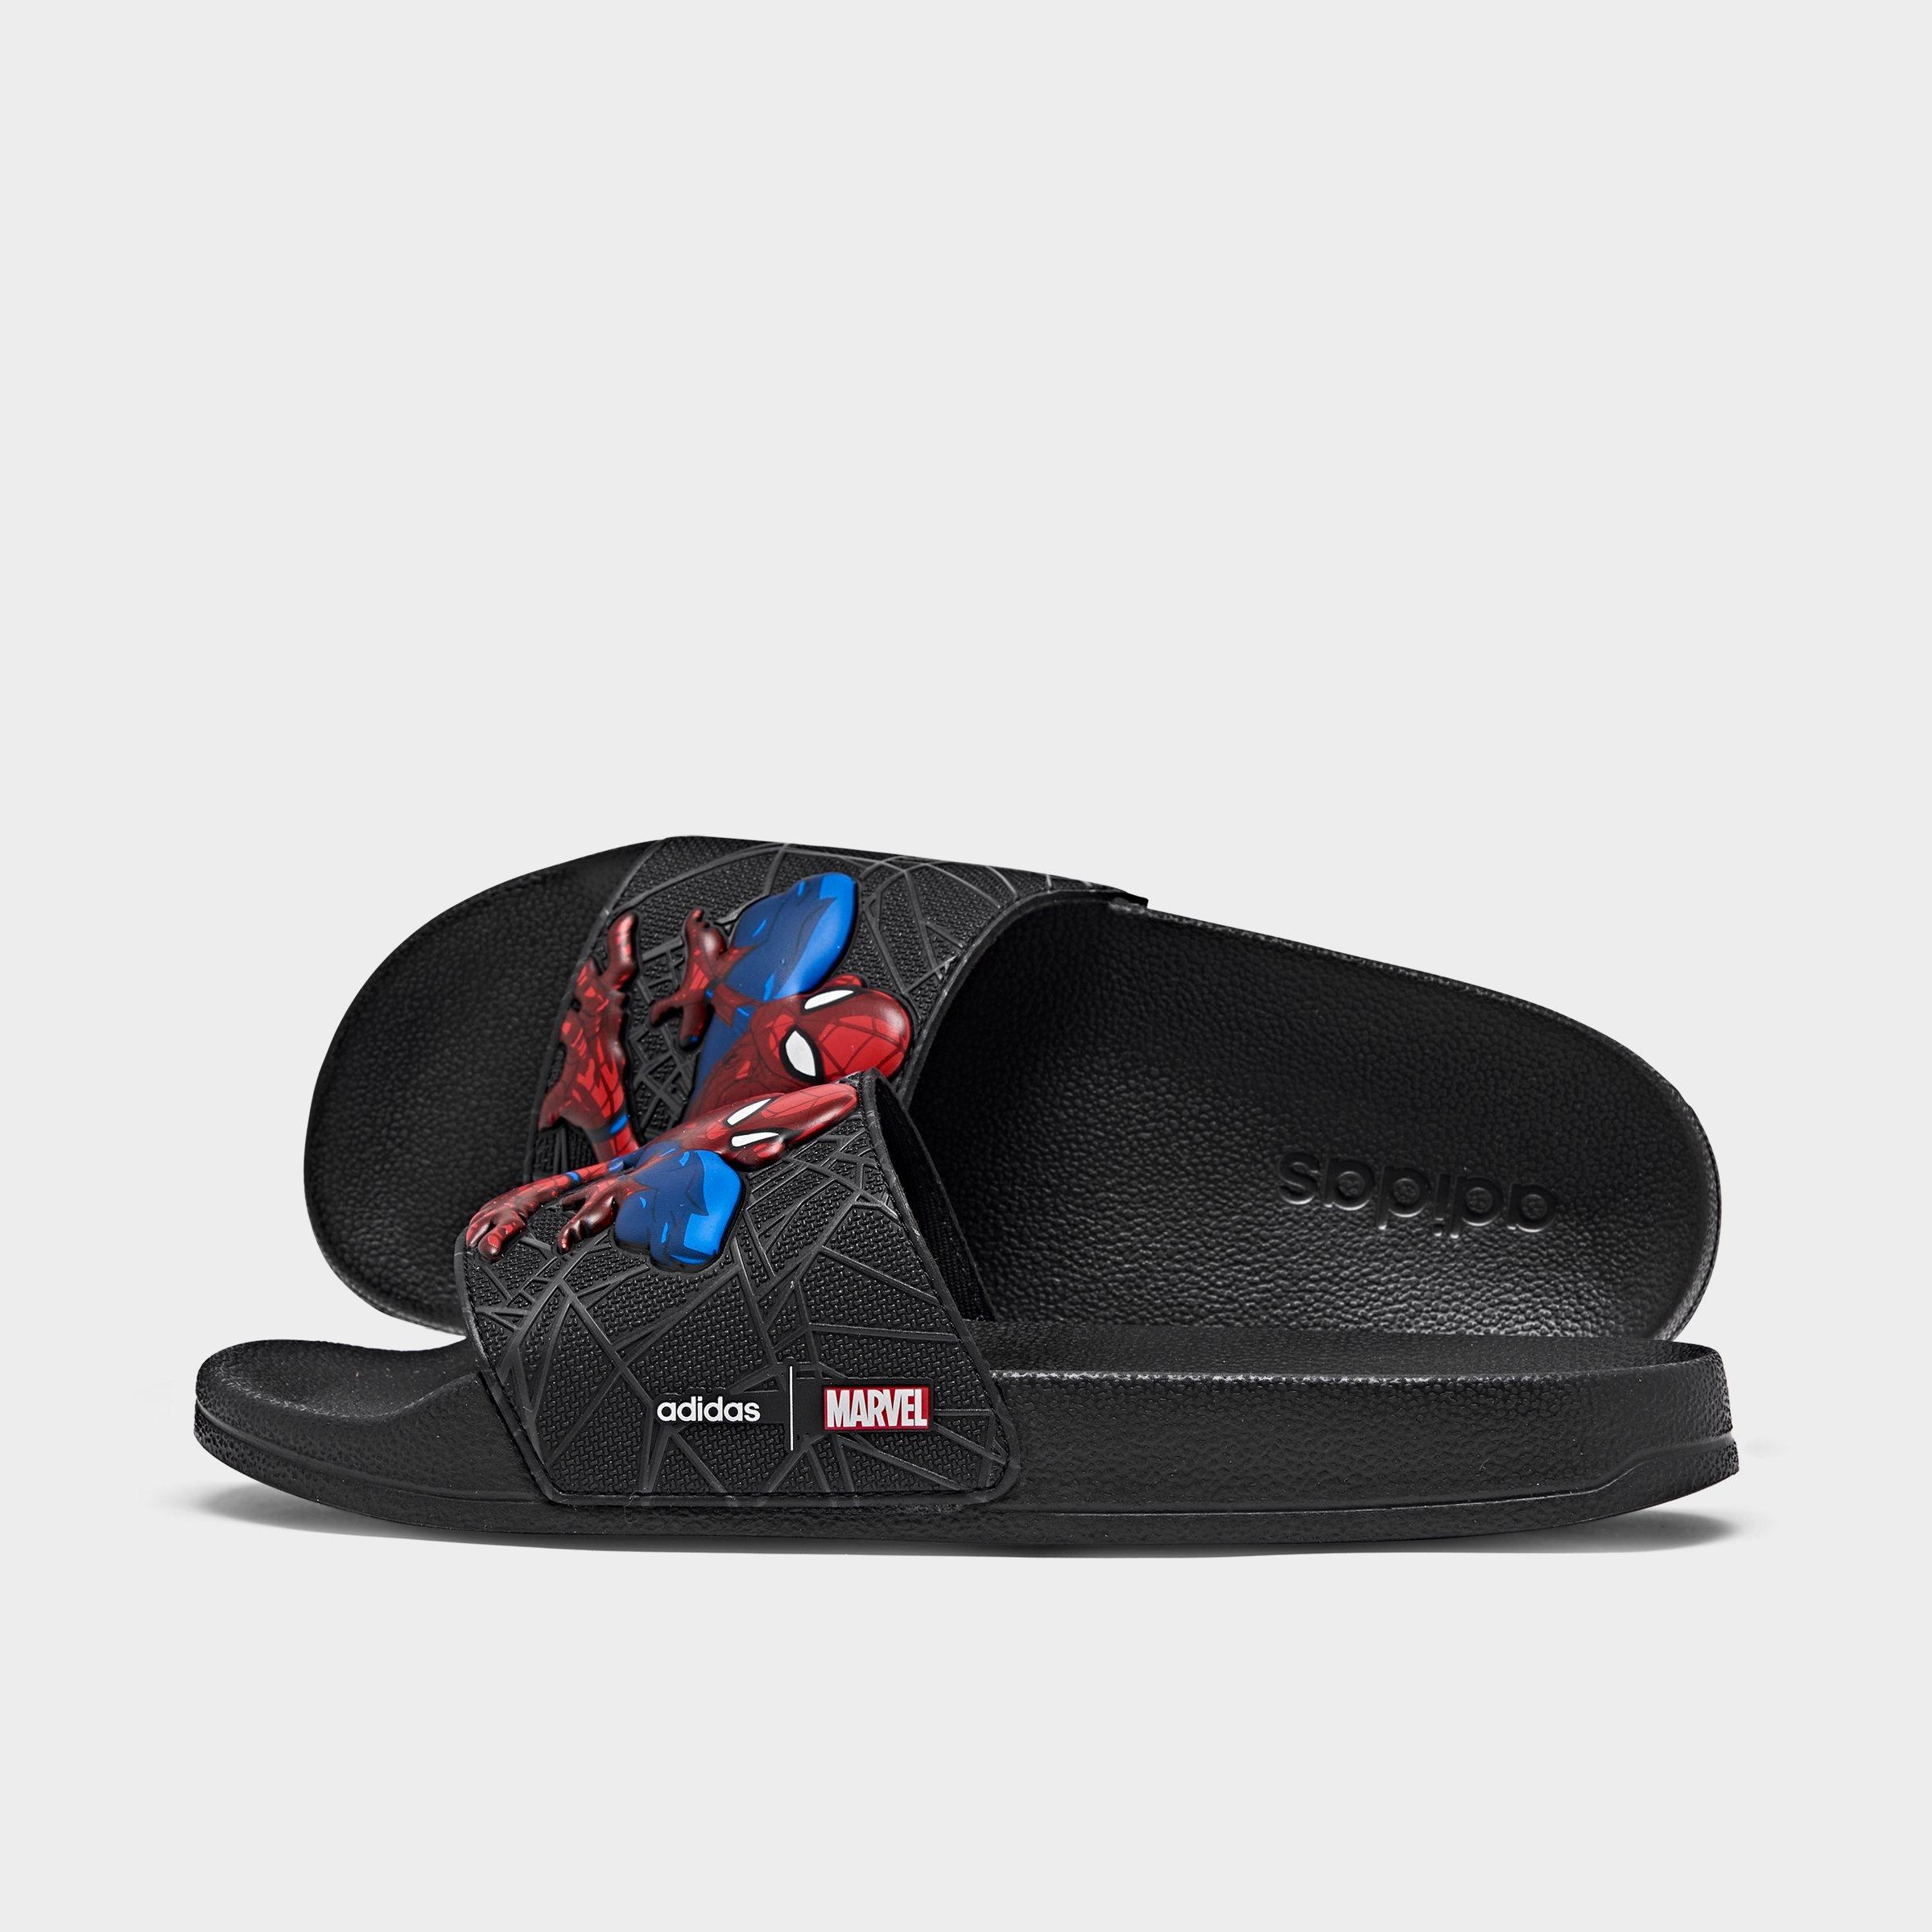 boys spiderman sandals